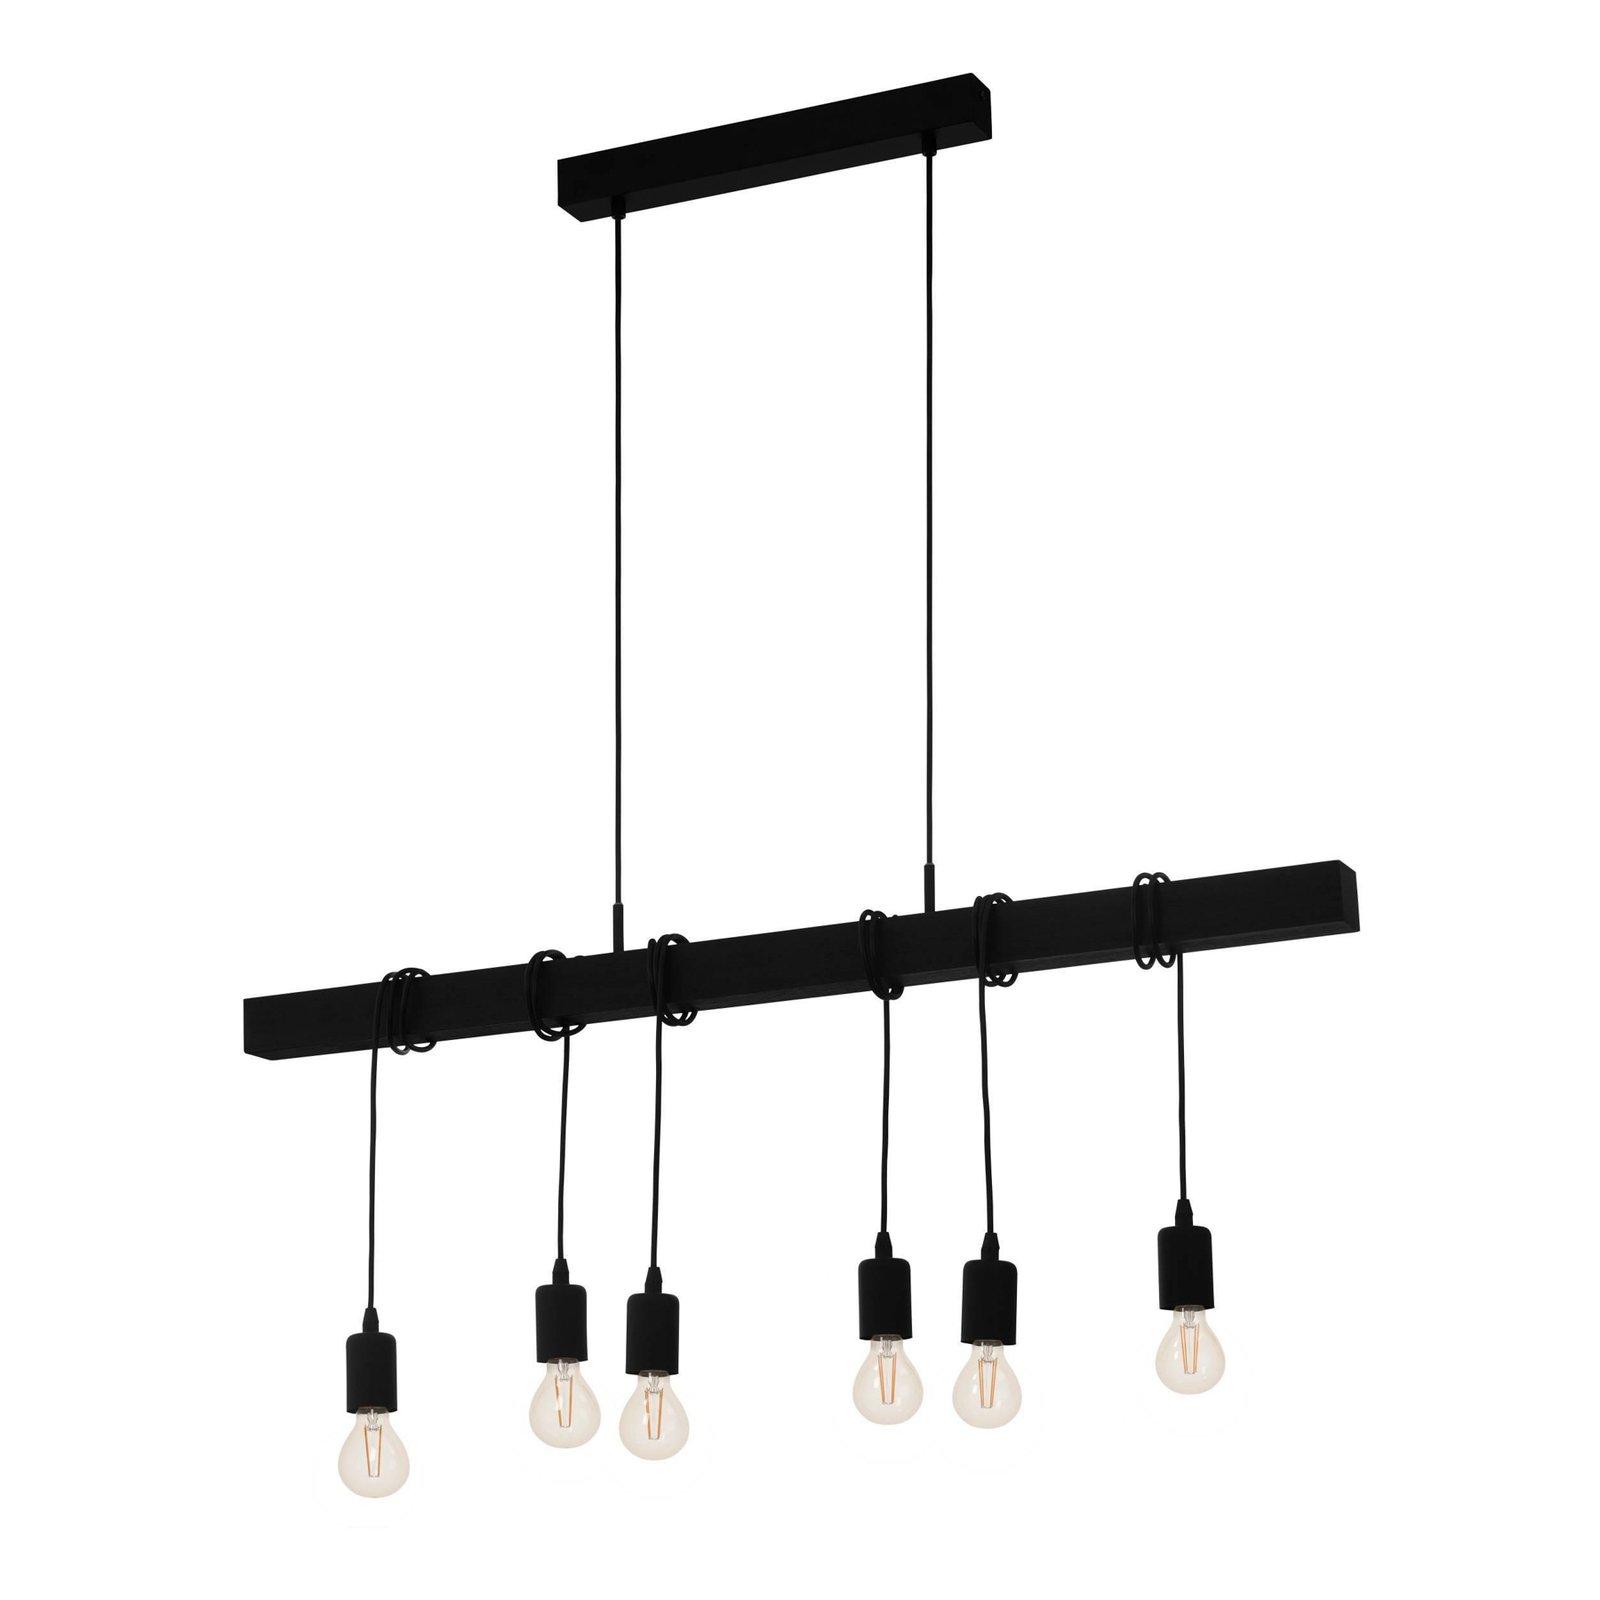 Townshend hanglamp, lengte 100 cm zwart, 6-lamps.